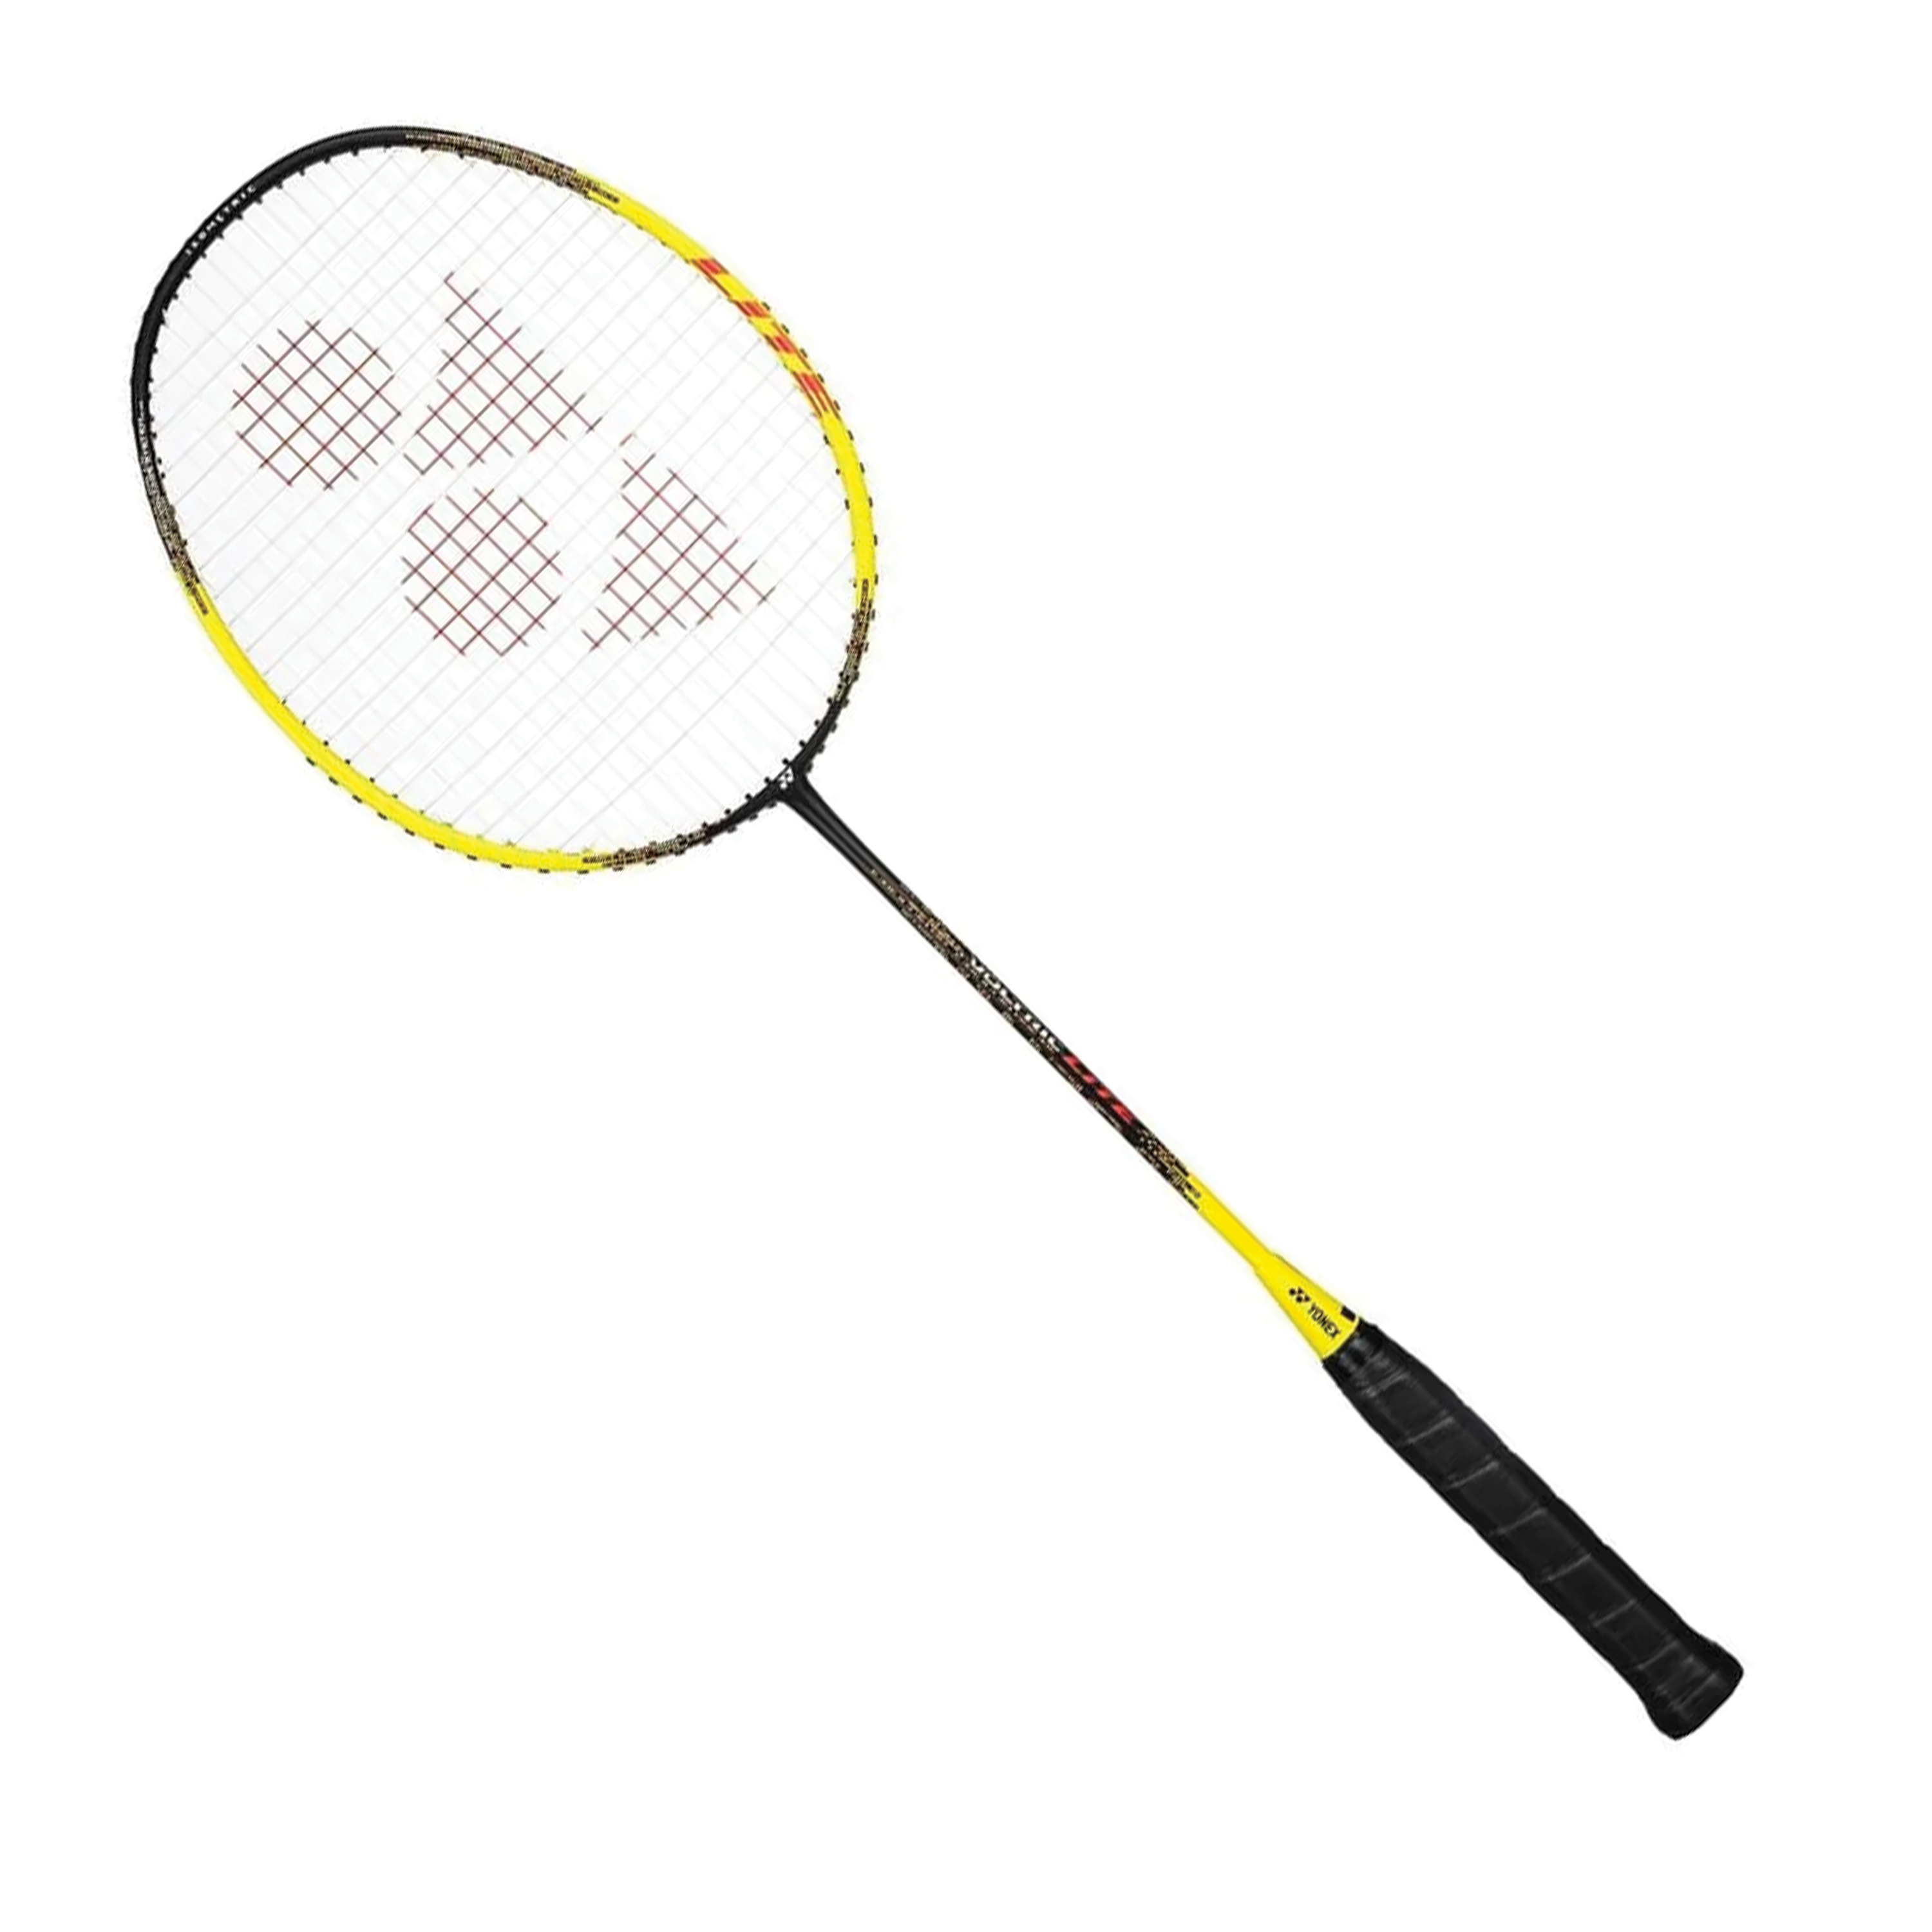 Yonex Voltric Lite Badminton Racquet Black/ Yellow 4U(83g)G5 (Ready to Go)